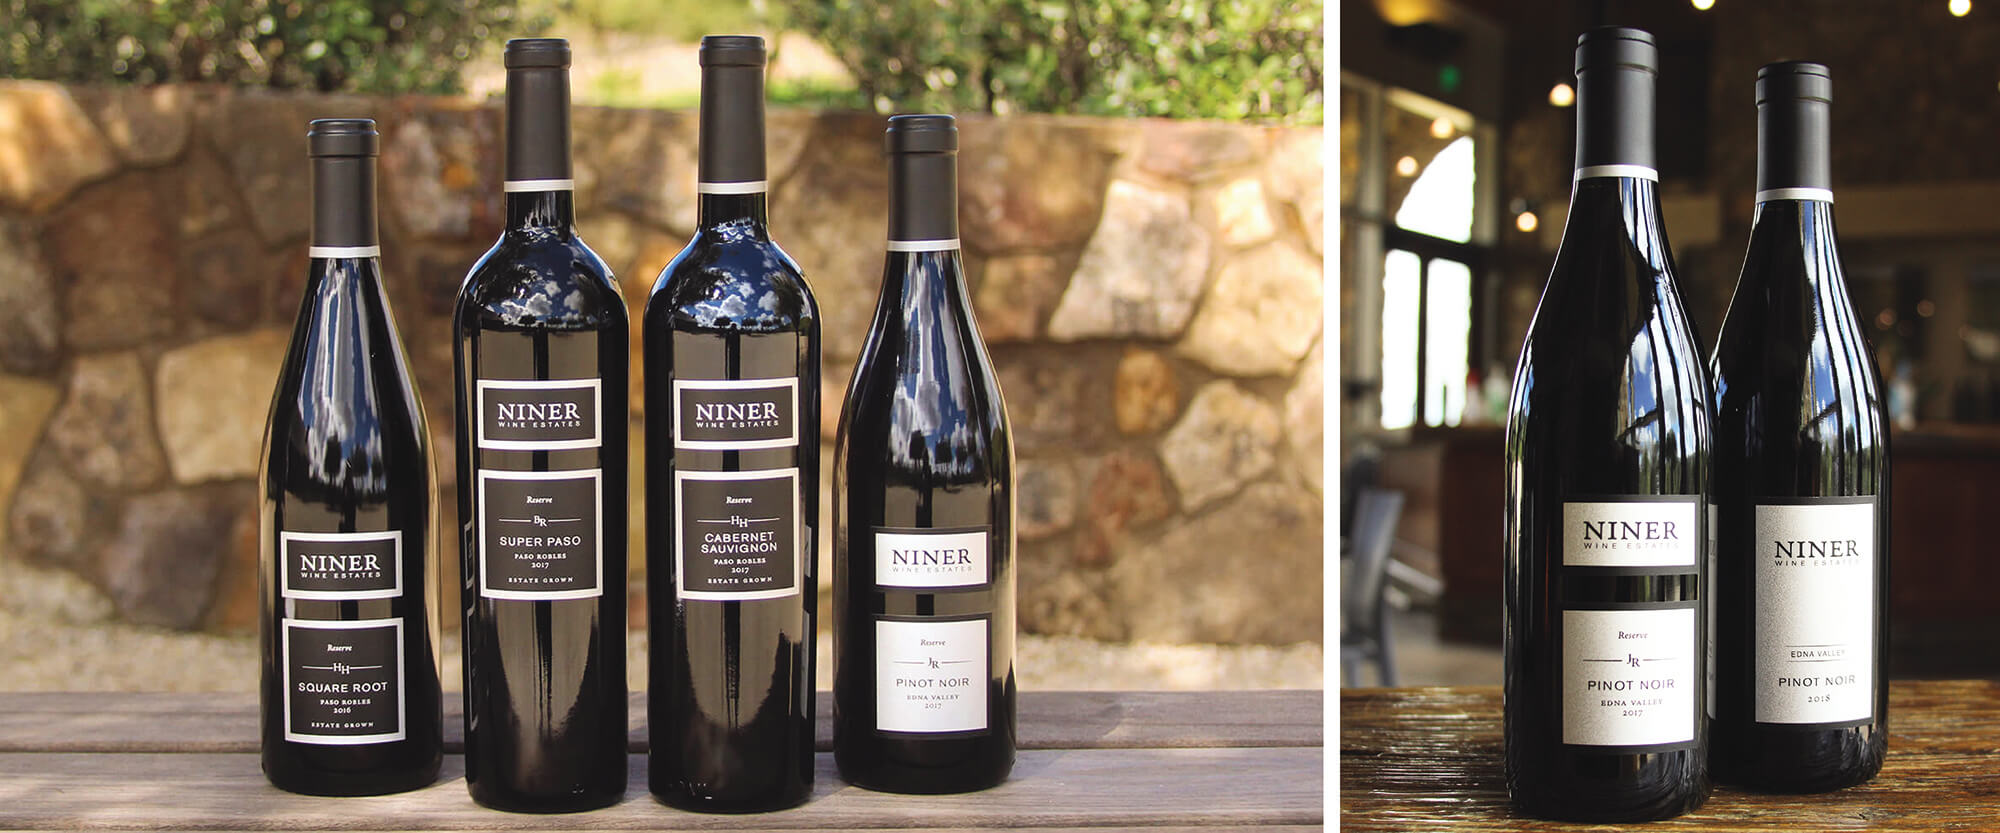 Left; reserve bottles in the shipment: Square Root, Super Paso, Cabernet Sauvignon, Pinot Noir. Right; Reserve Pinot Noir and Estate Pinot Noir